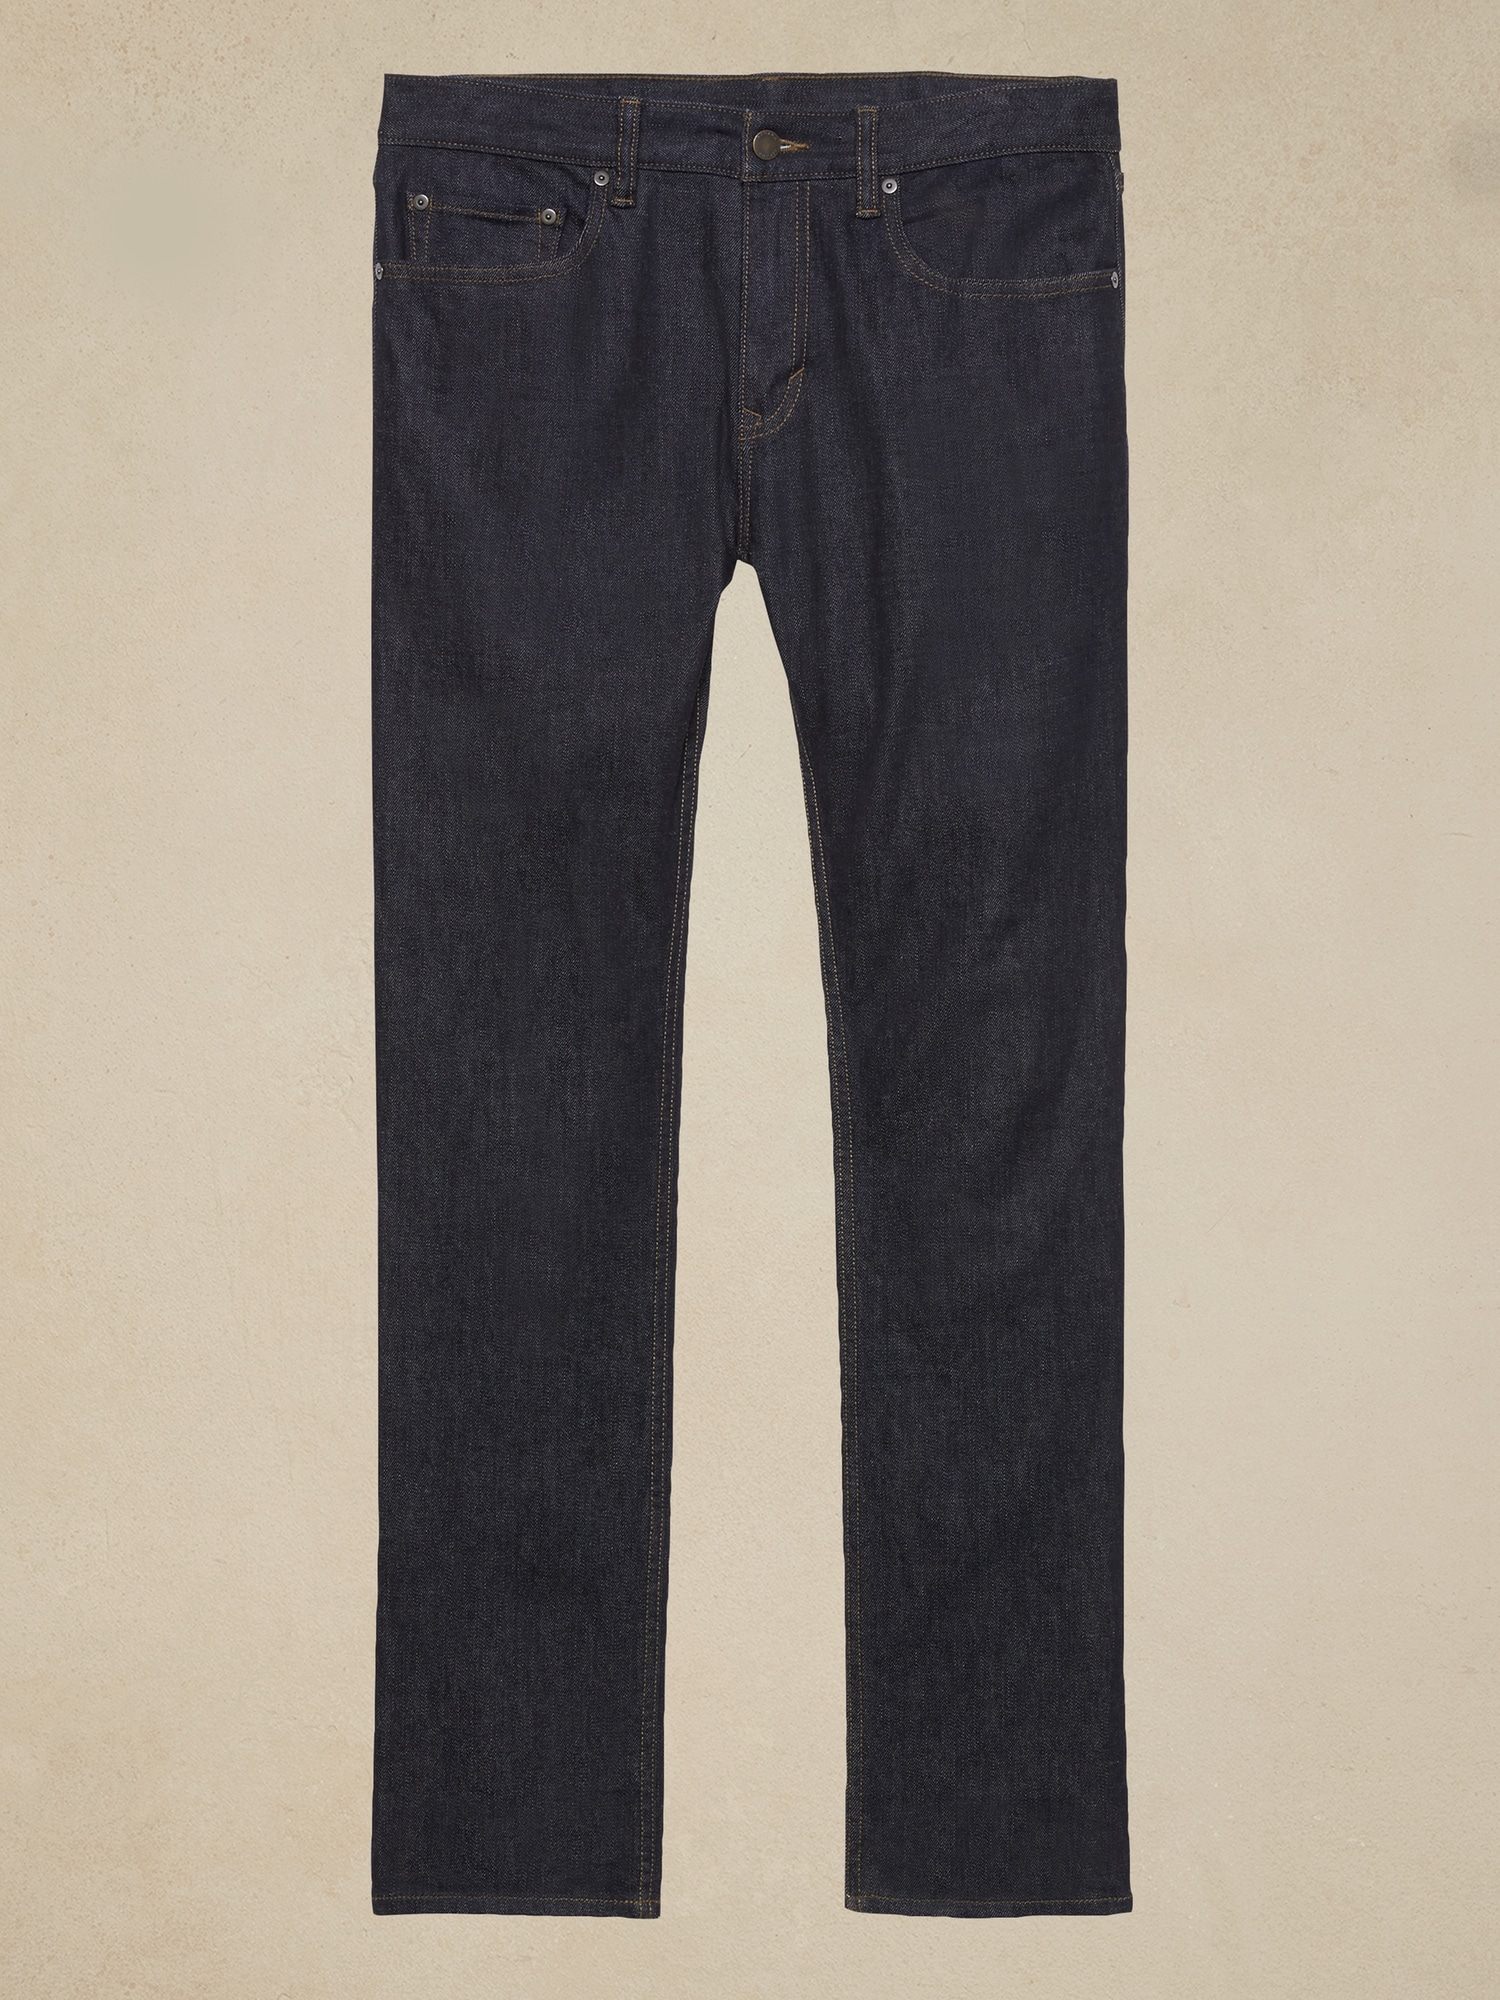 Buy Men Grey Dark Wash Slim Tapered Jeans Online - 743273